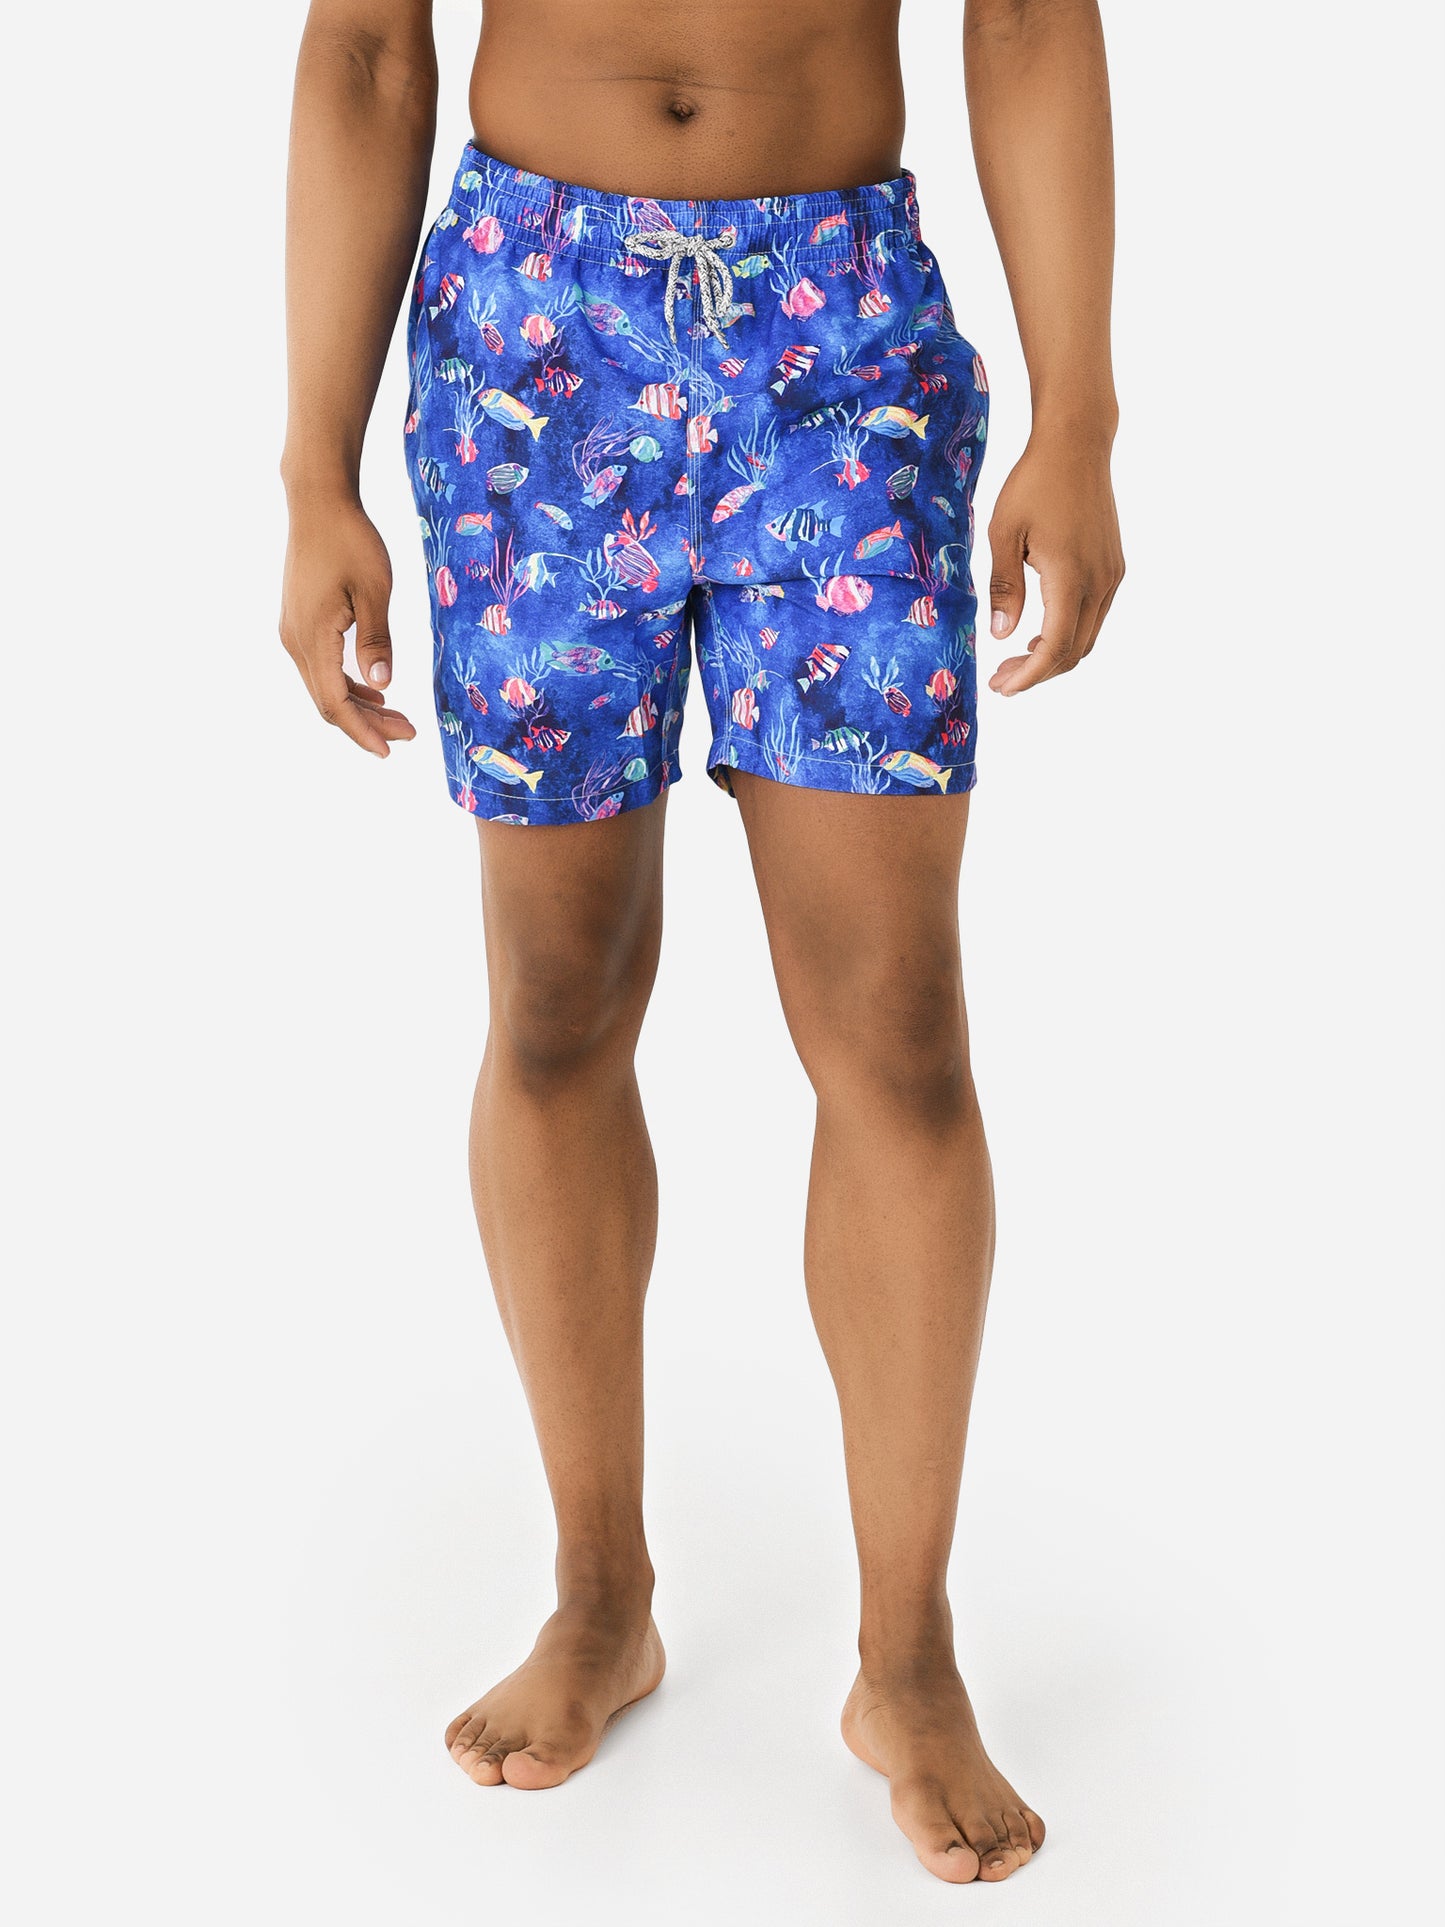 Michaels Swimwear Men's Tropical Reef Swim Trunk